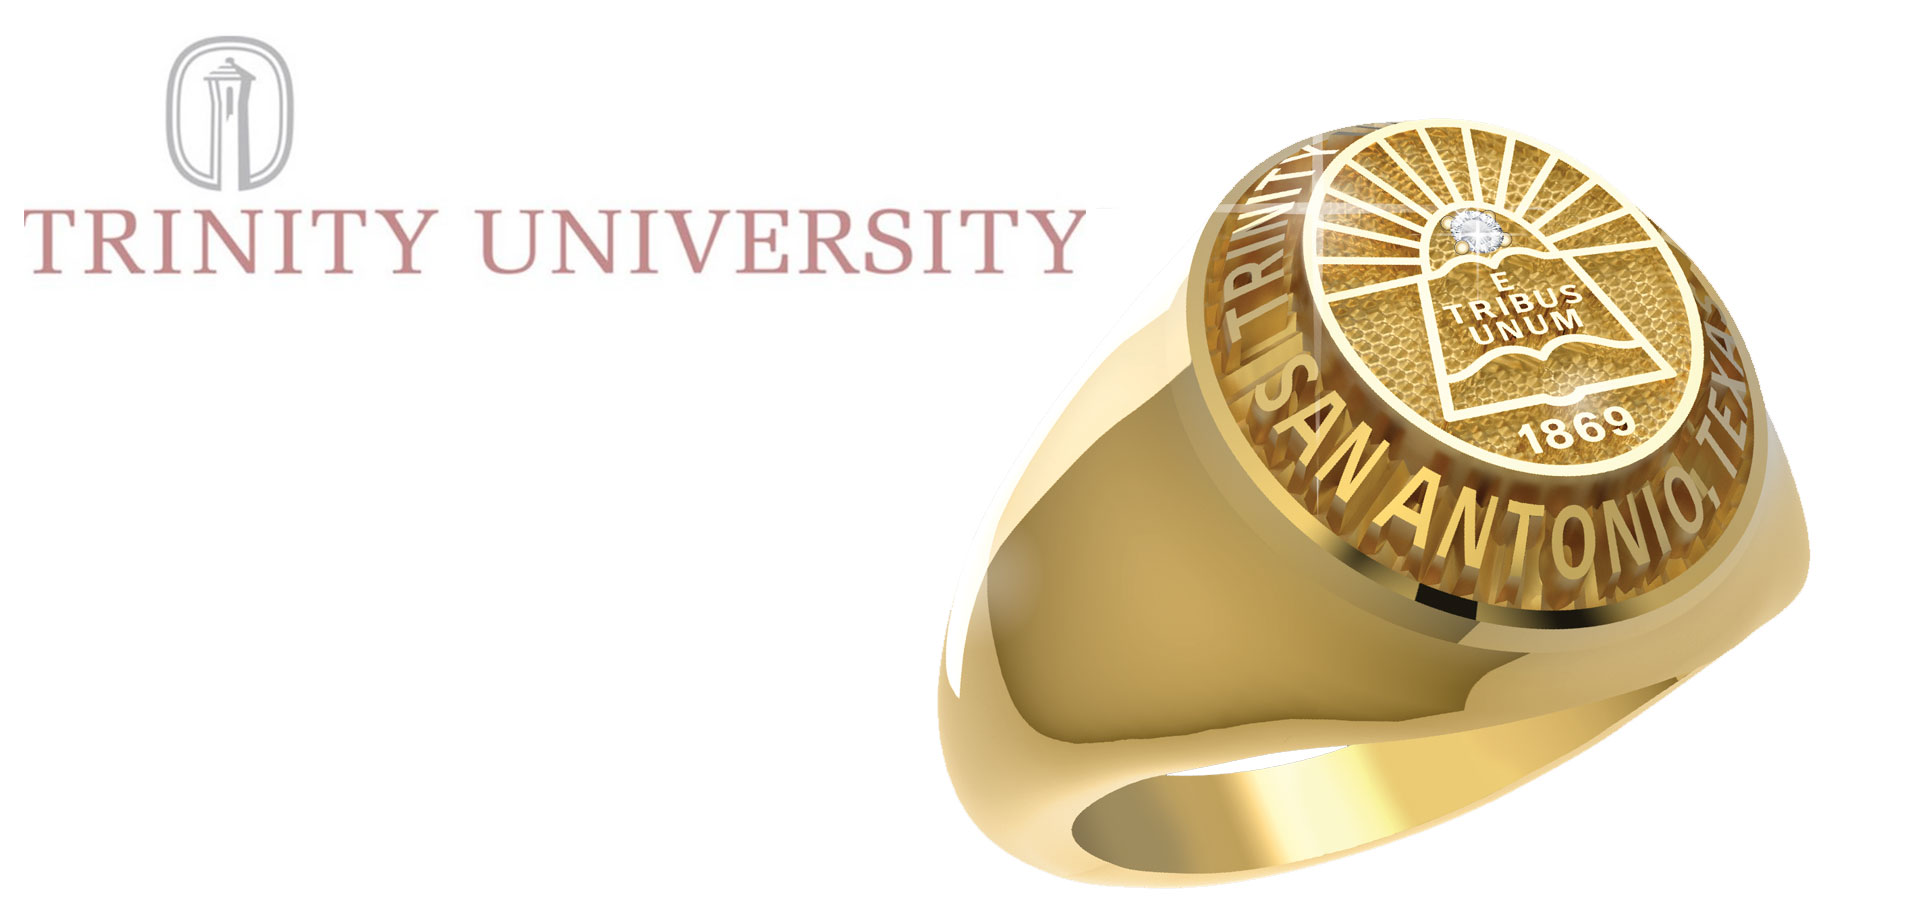 image of example Trinity University rings